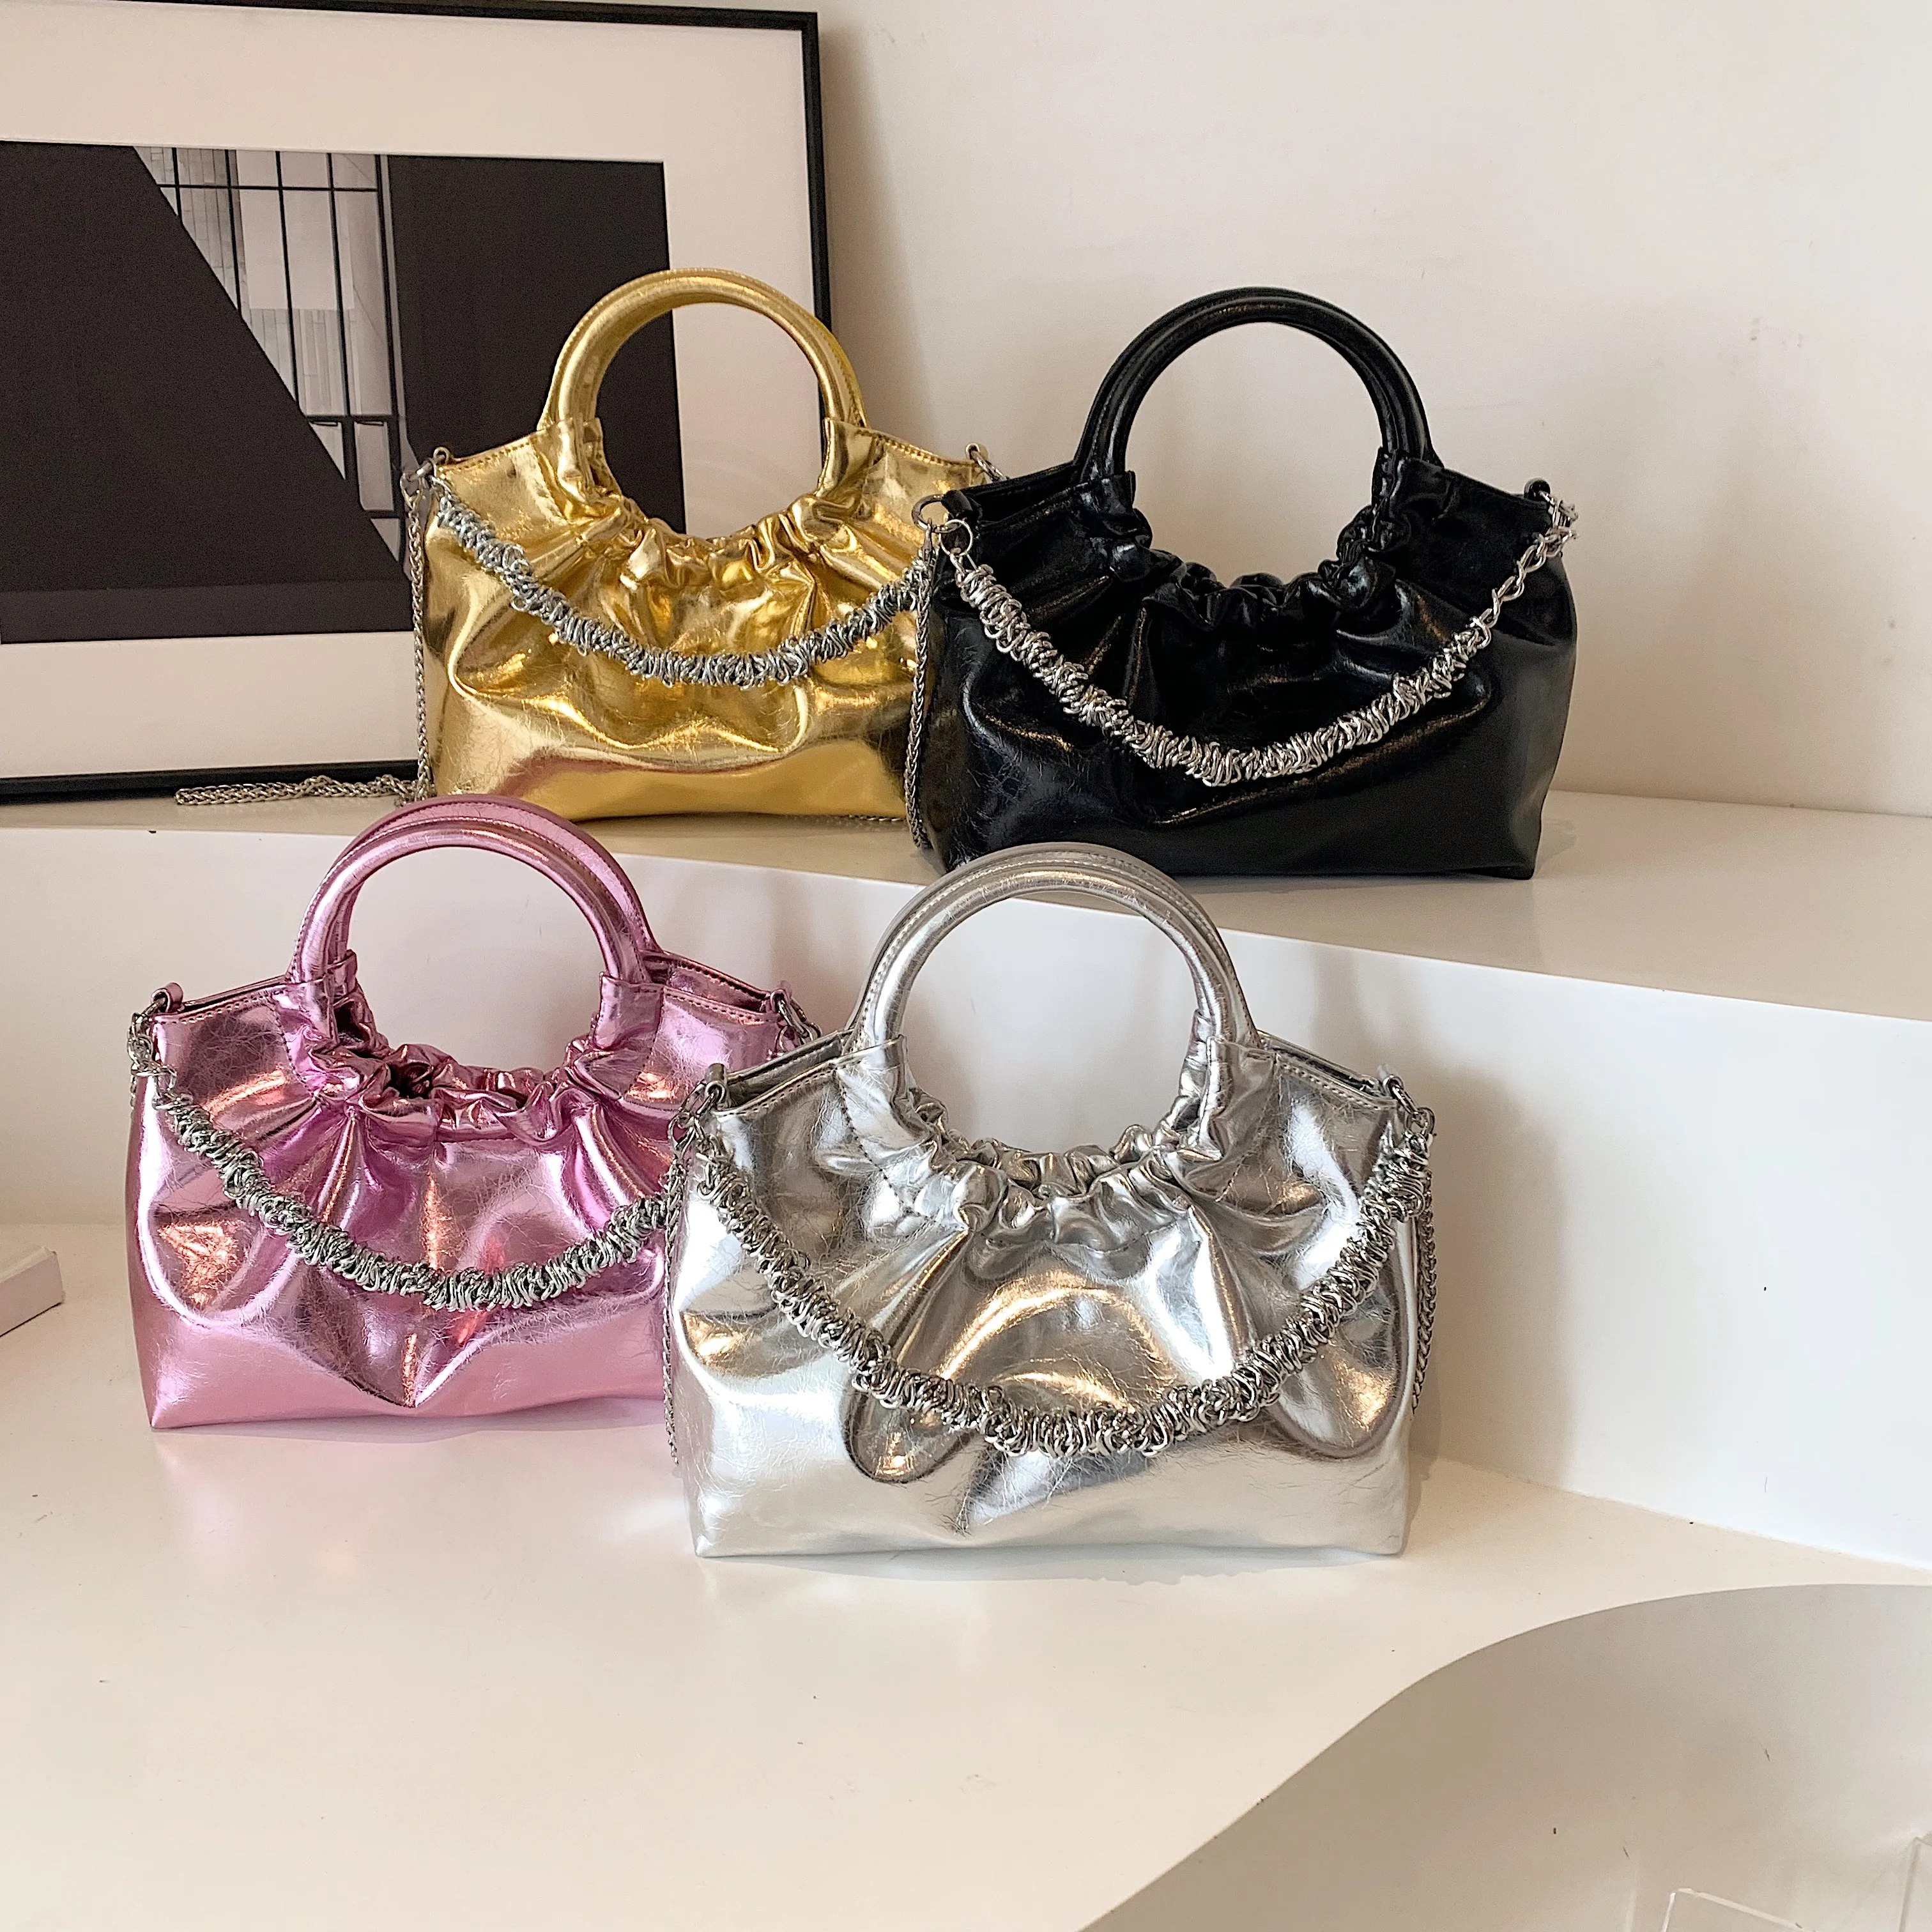 Silver Handbag Women Bag Round Ring Handle Tote Quality Soft Leather Shoulder Bag Fashion Chain Clutch Bag Female Luxury Bolsos